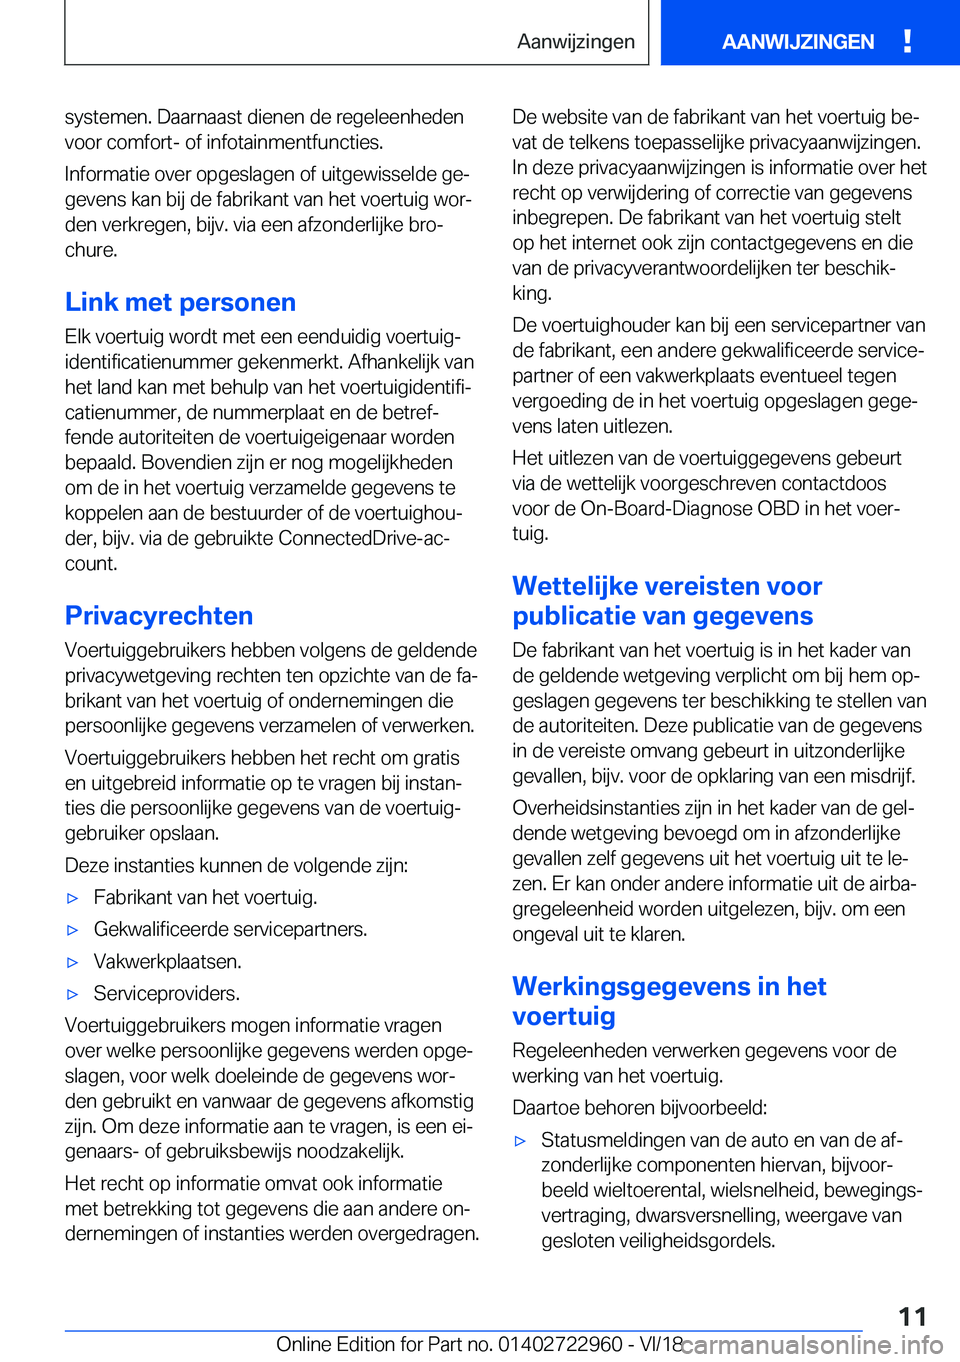 BMW M4 2019  Instructieboekjes (in Dutch) �s�y�s�t�e�m�e�n�.��D�a�a�r�n�a�a�s�t��d�i�e�n�e�n��d�e��r�e�g�e�l�e�e�n�h�e�d�e�n
�v�o�o�r��c�o�m�f�o�r�t�-��o�f��i�n�f�o�t�a�i�n�m�e�n�t�f�u�n�c�t�i�e�s�.
�I�n�f�o�r�m�a�t�i�e��o�v�e�r��o�p